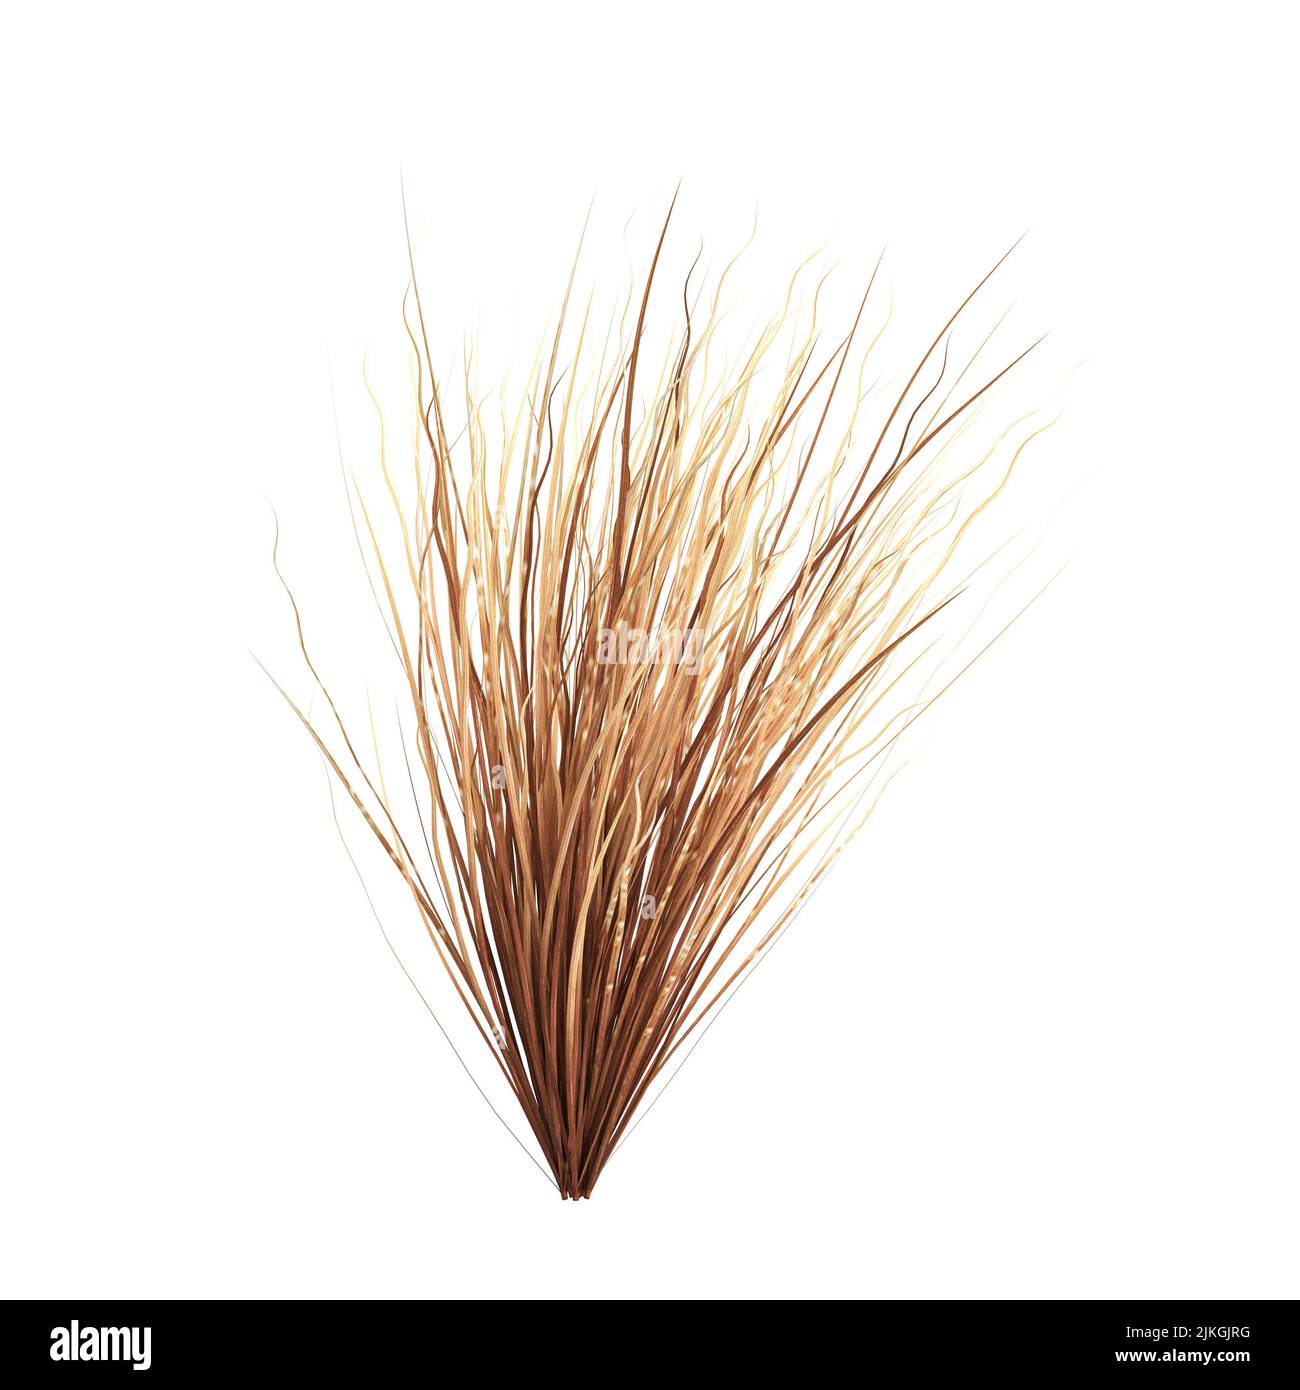 3d illustration of carex buchananii grass isolated on white background Stock Photo